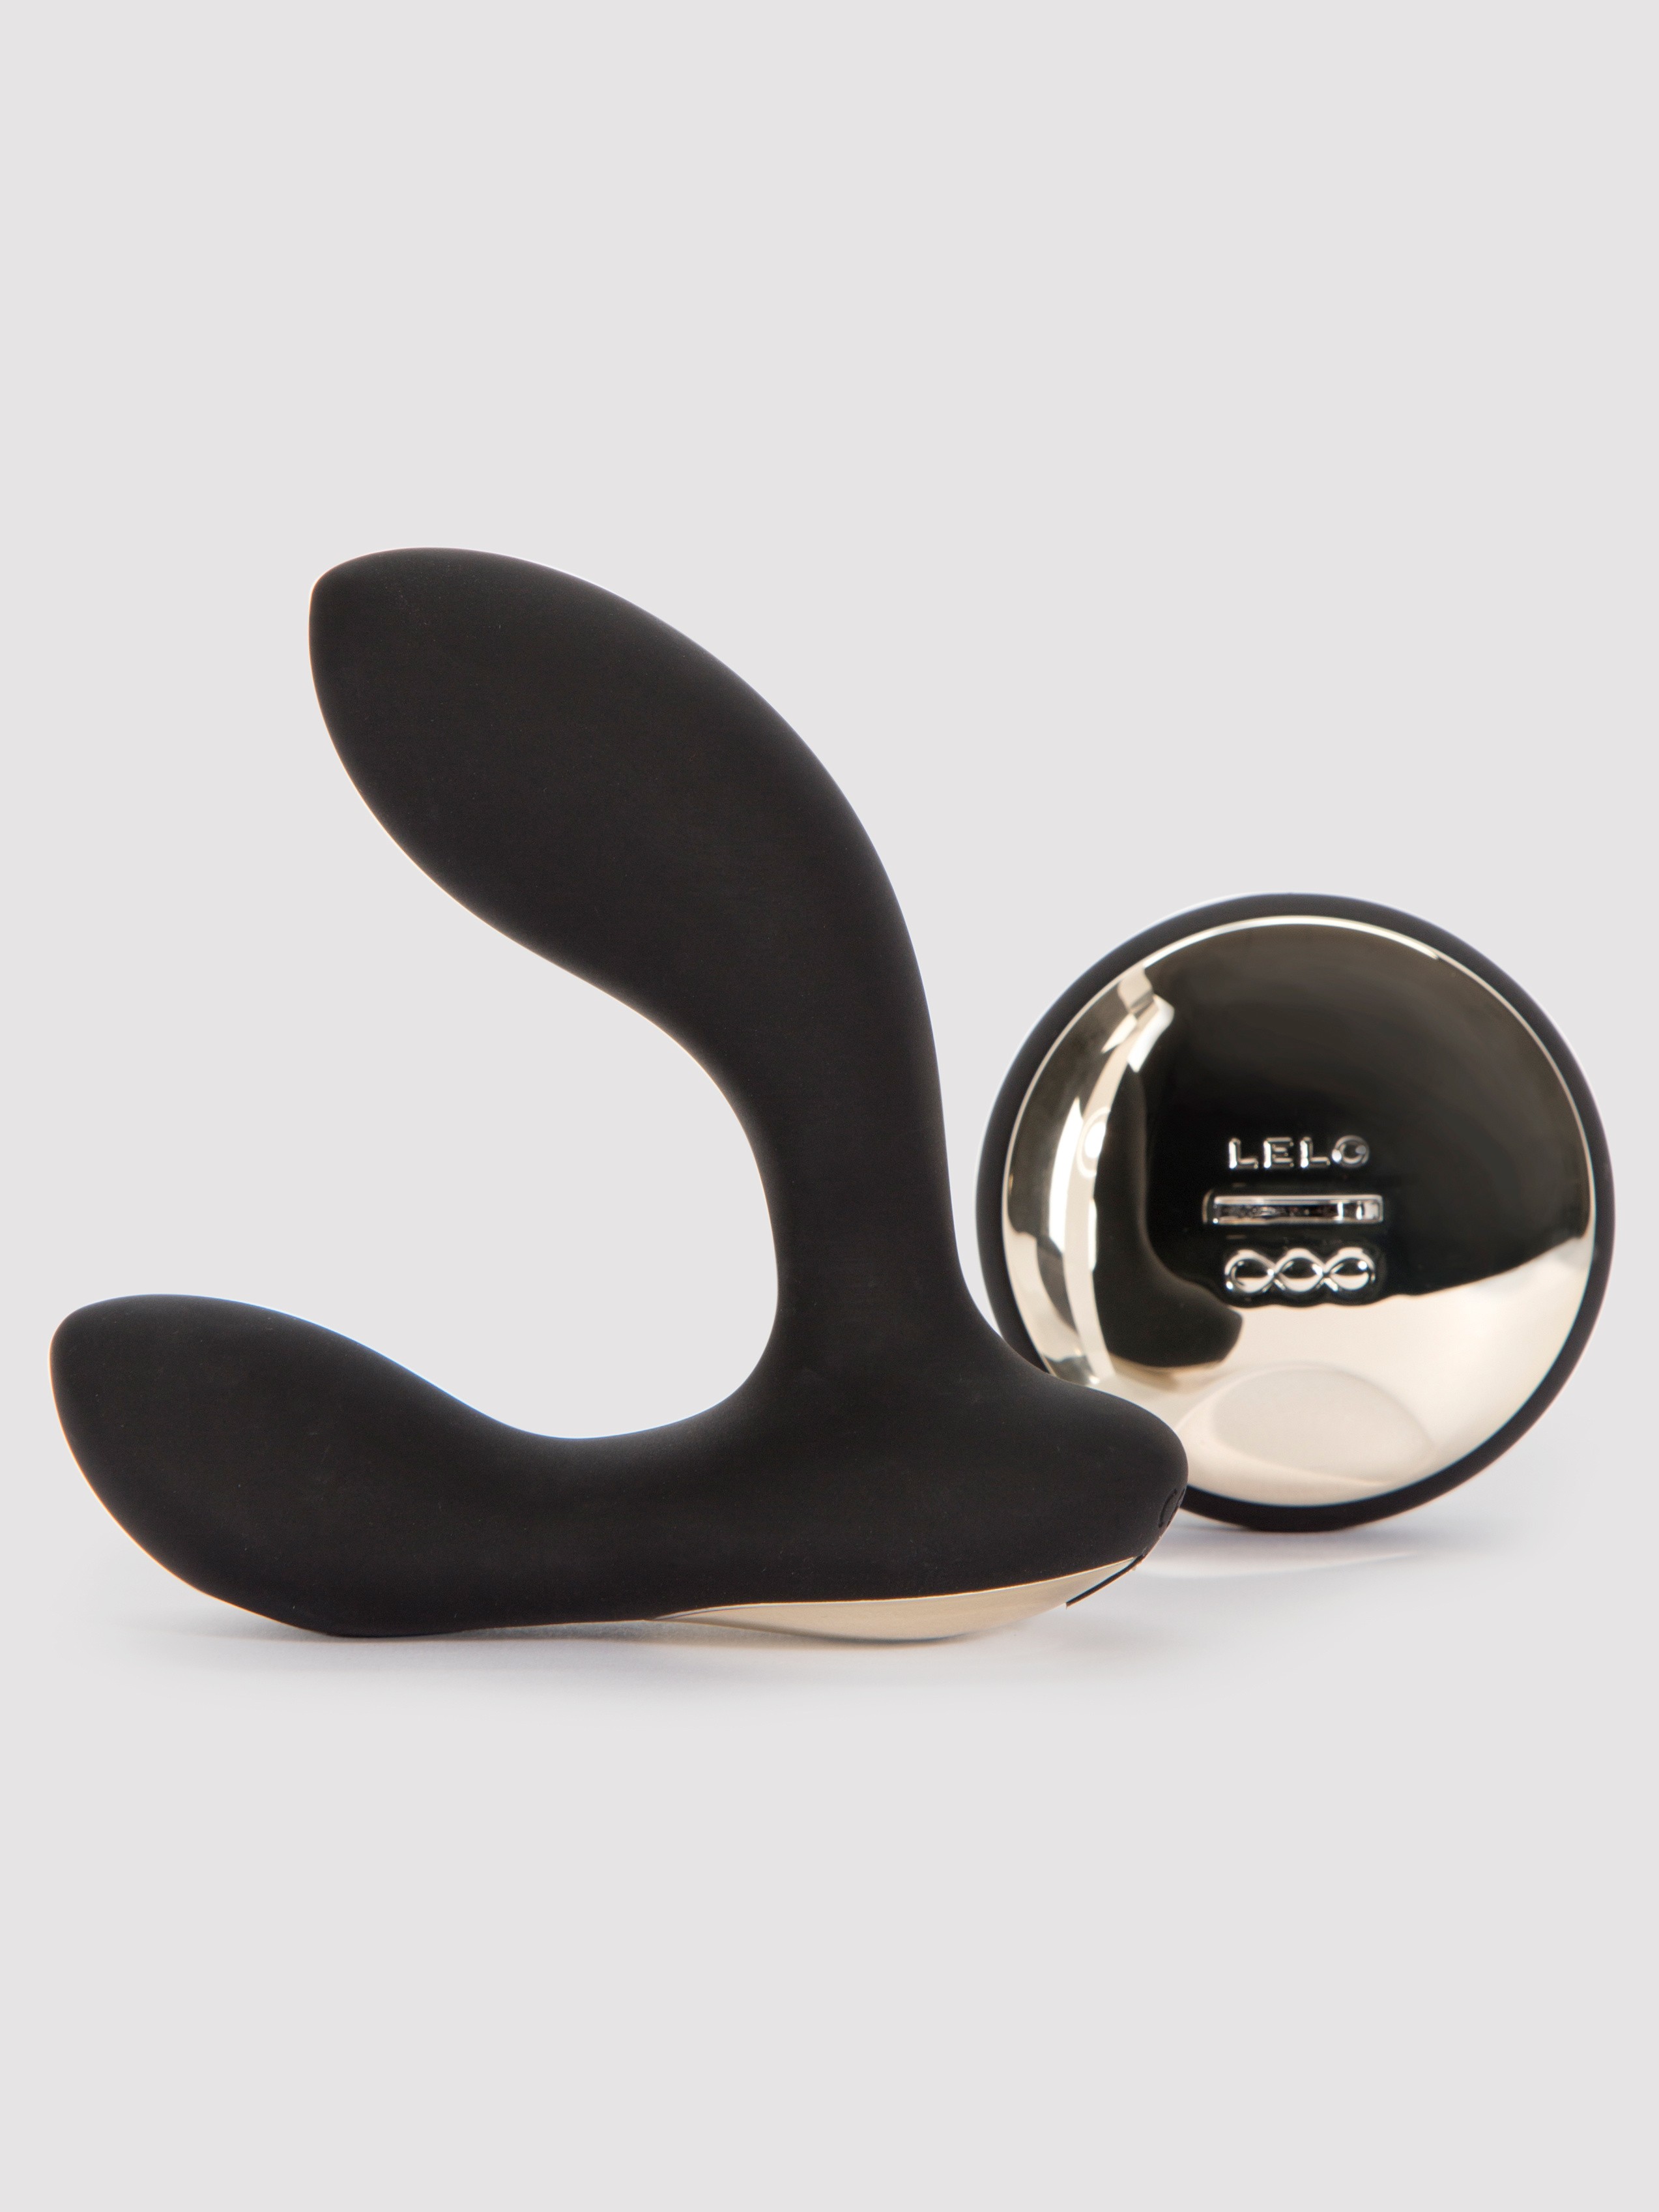 Lelo Hugo SenseMotion Remote Control Rechargeable Prostate Massager - Black